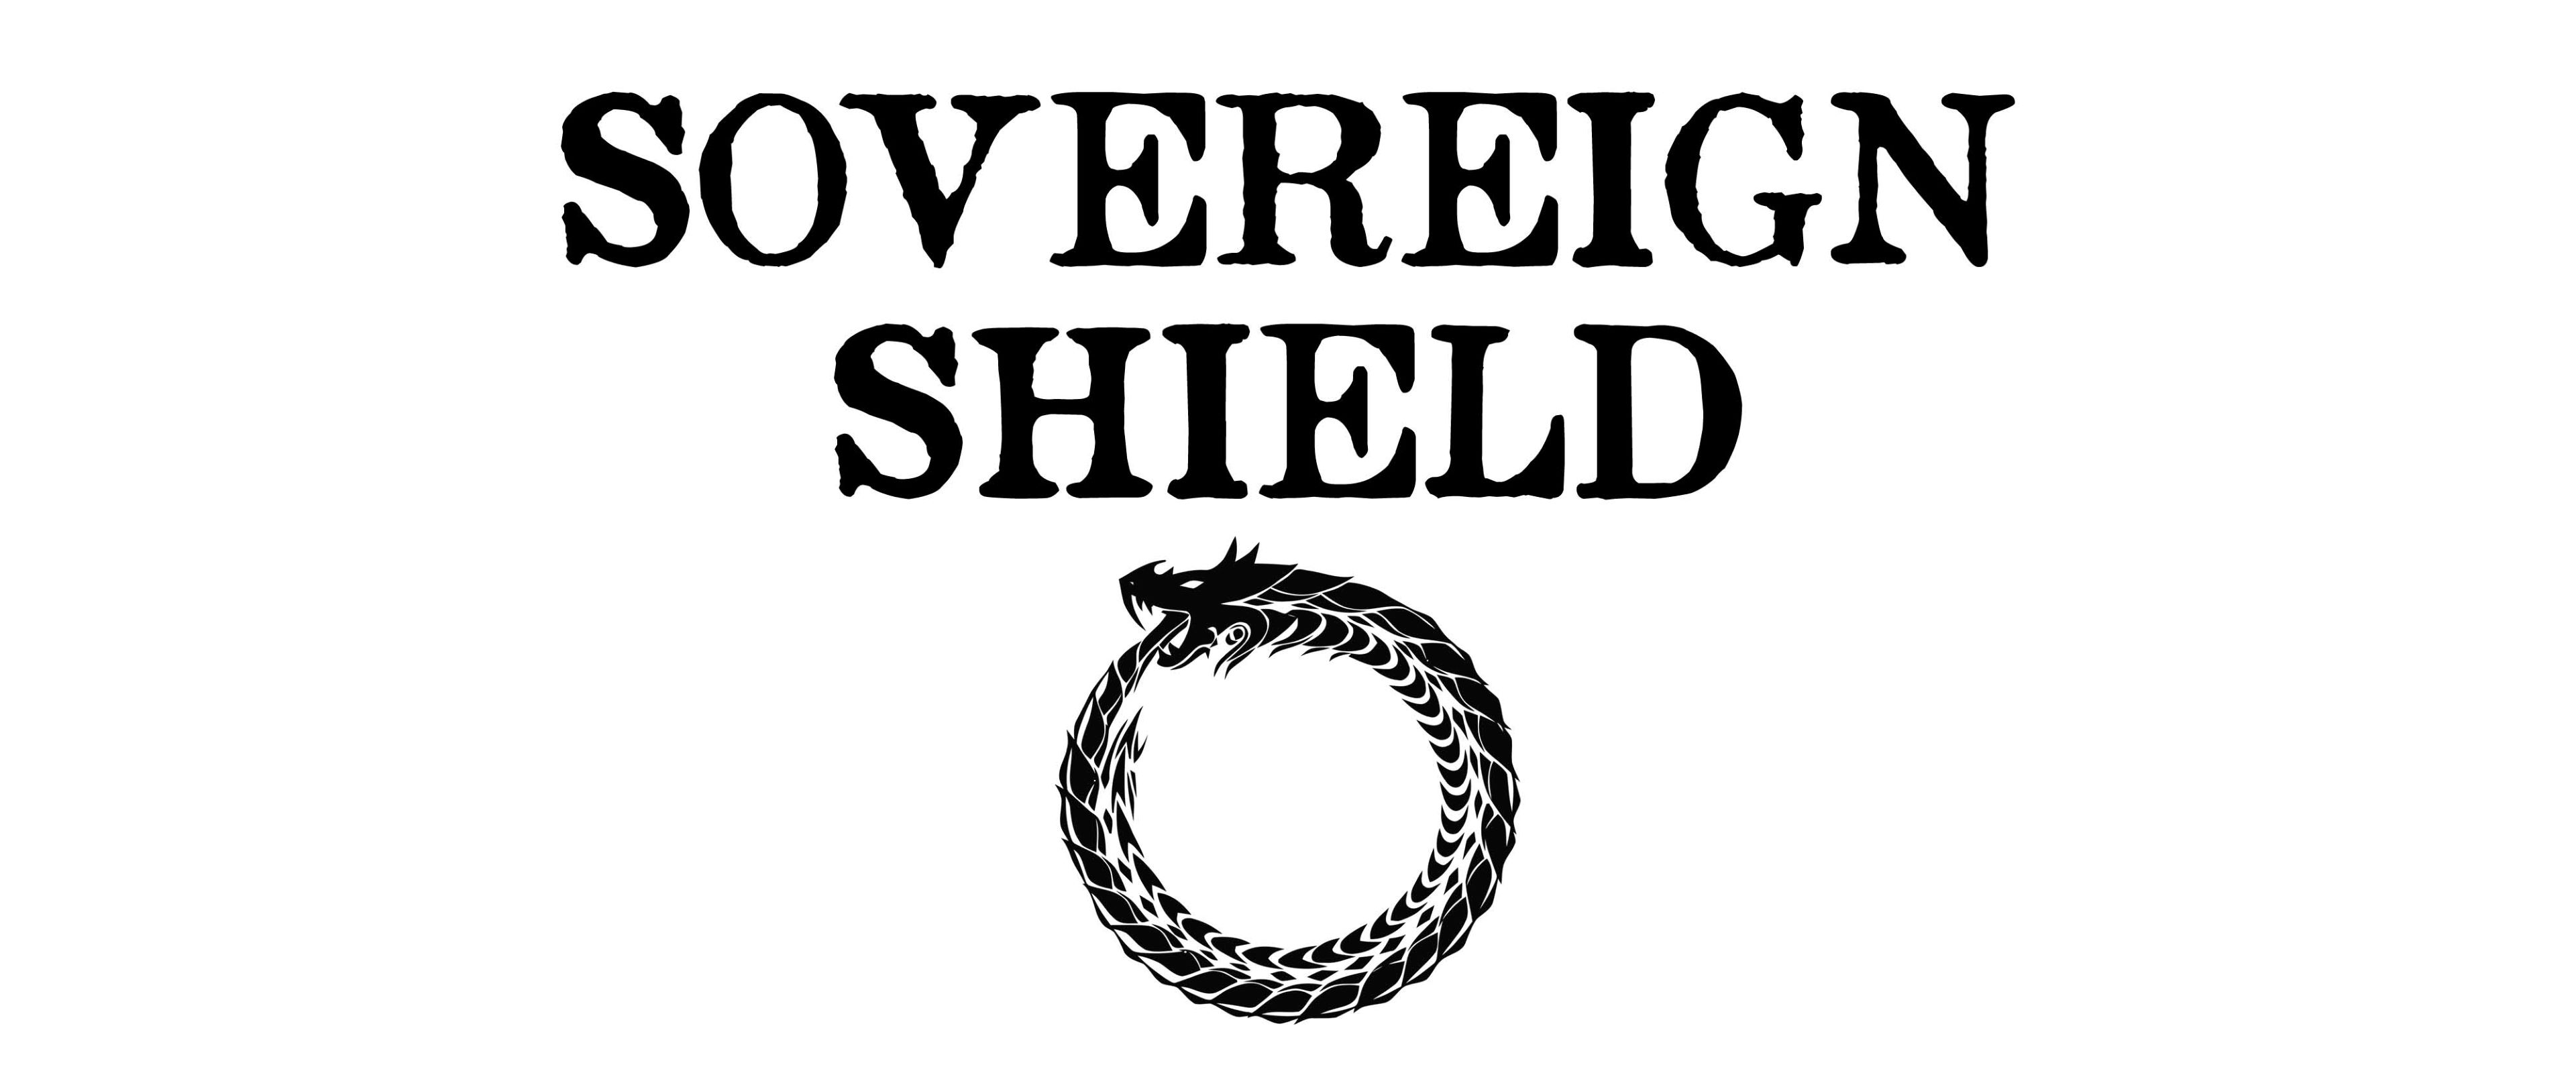 Sovereign Shield